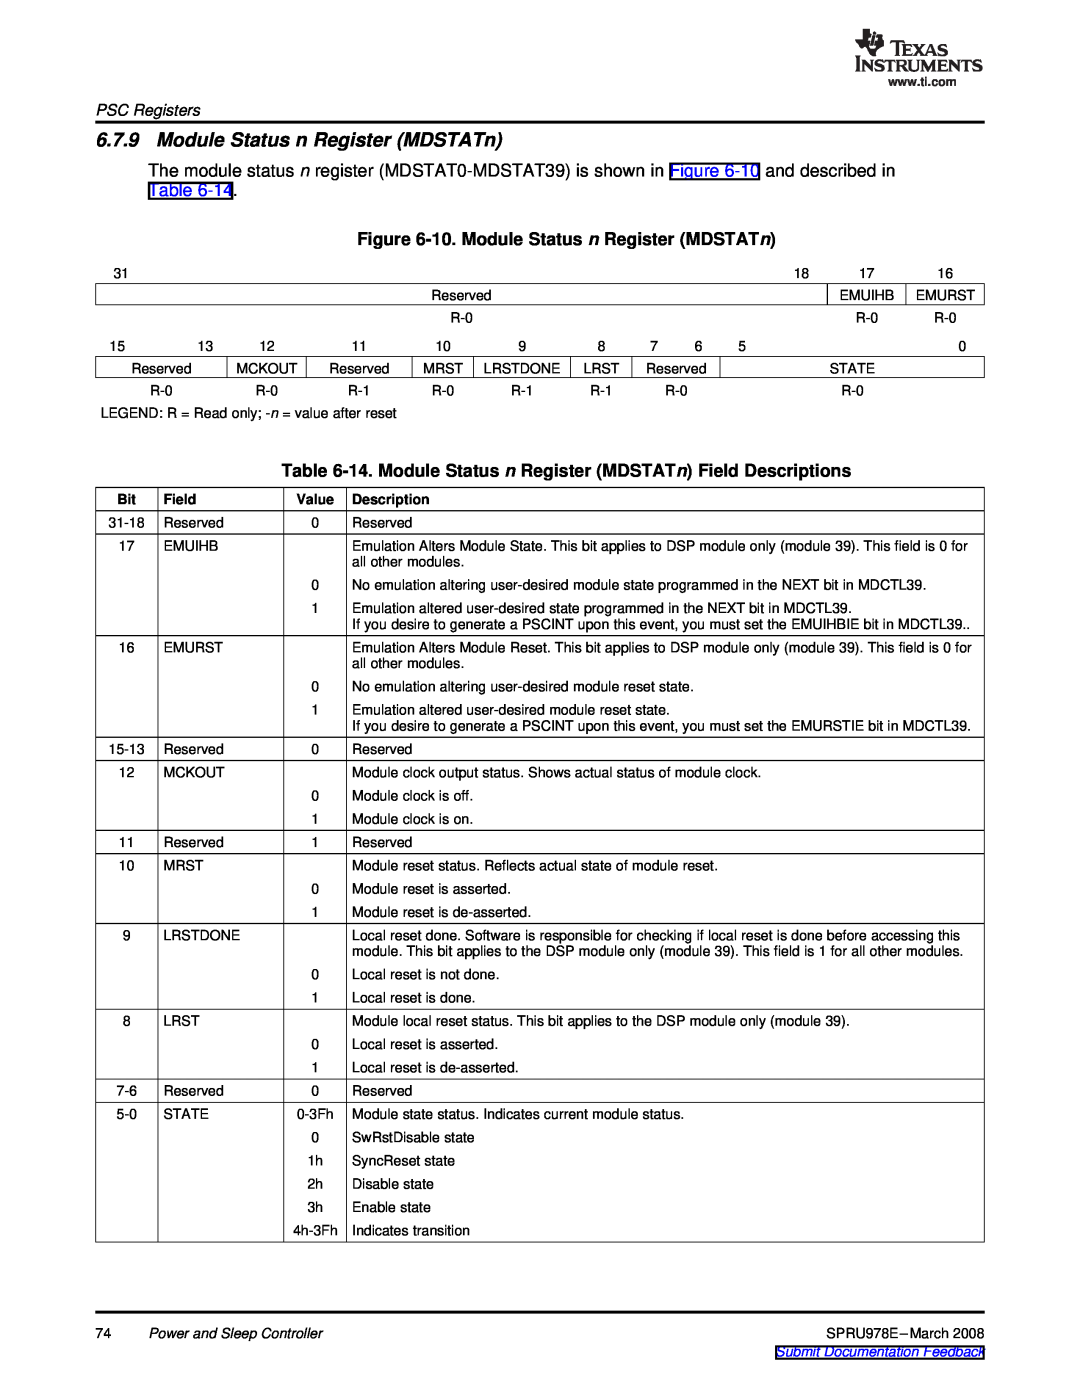 Texas Instruments TMS320DM643x manual 10. Module Status n Register MDSTATn, PSC Registers, Field, Value, Description 